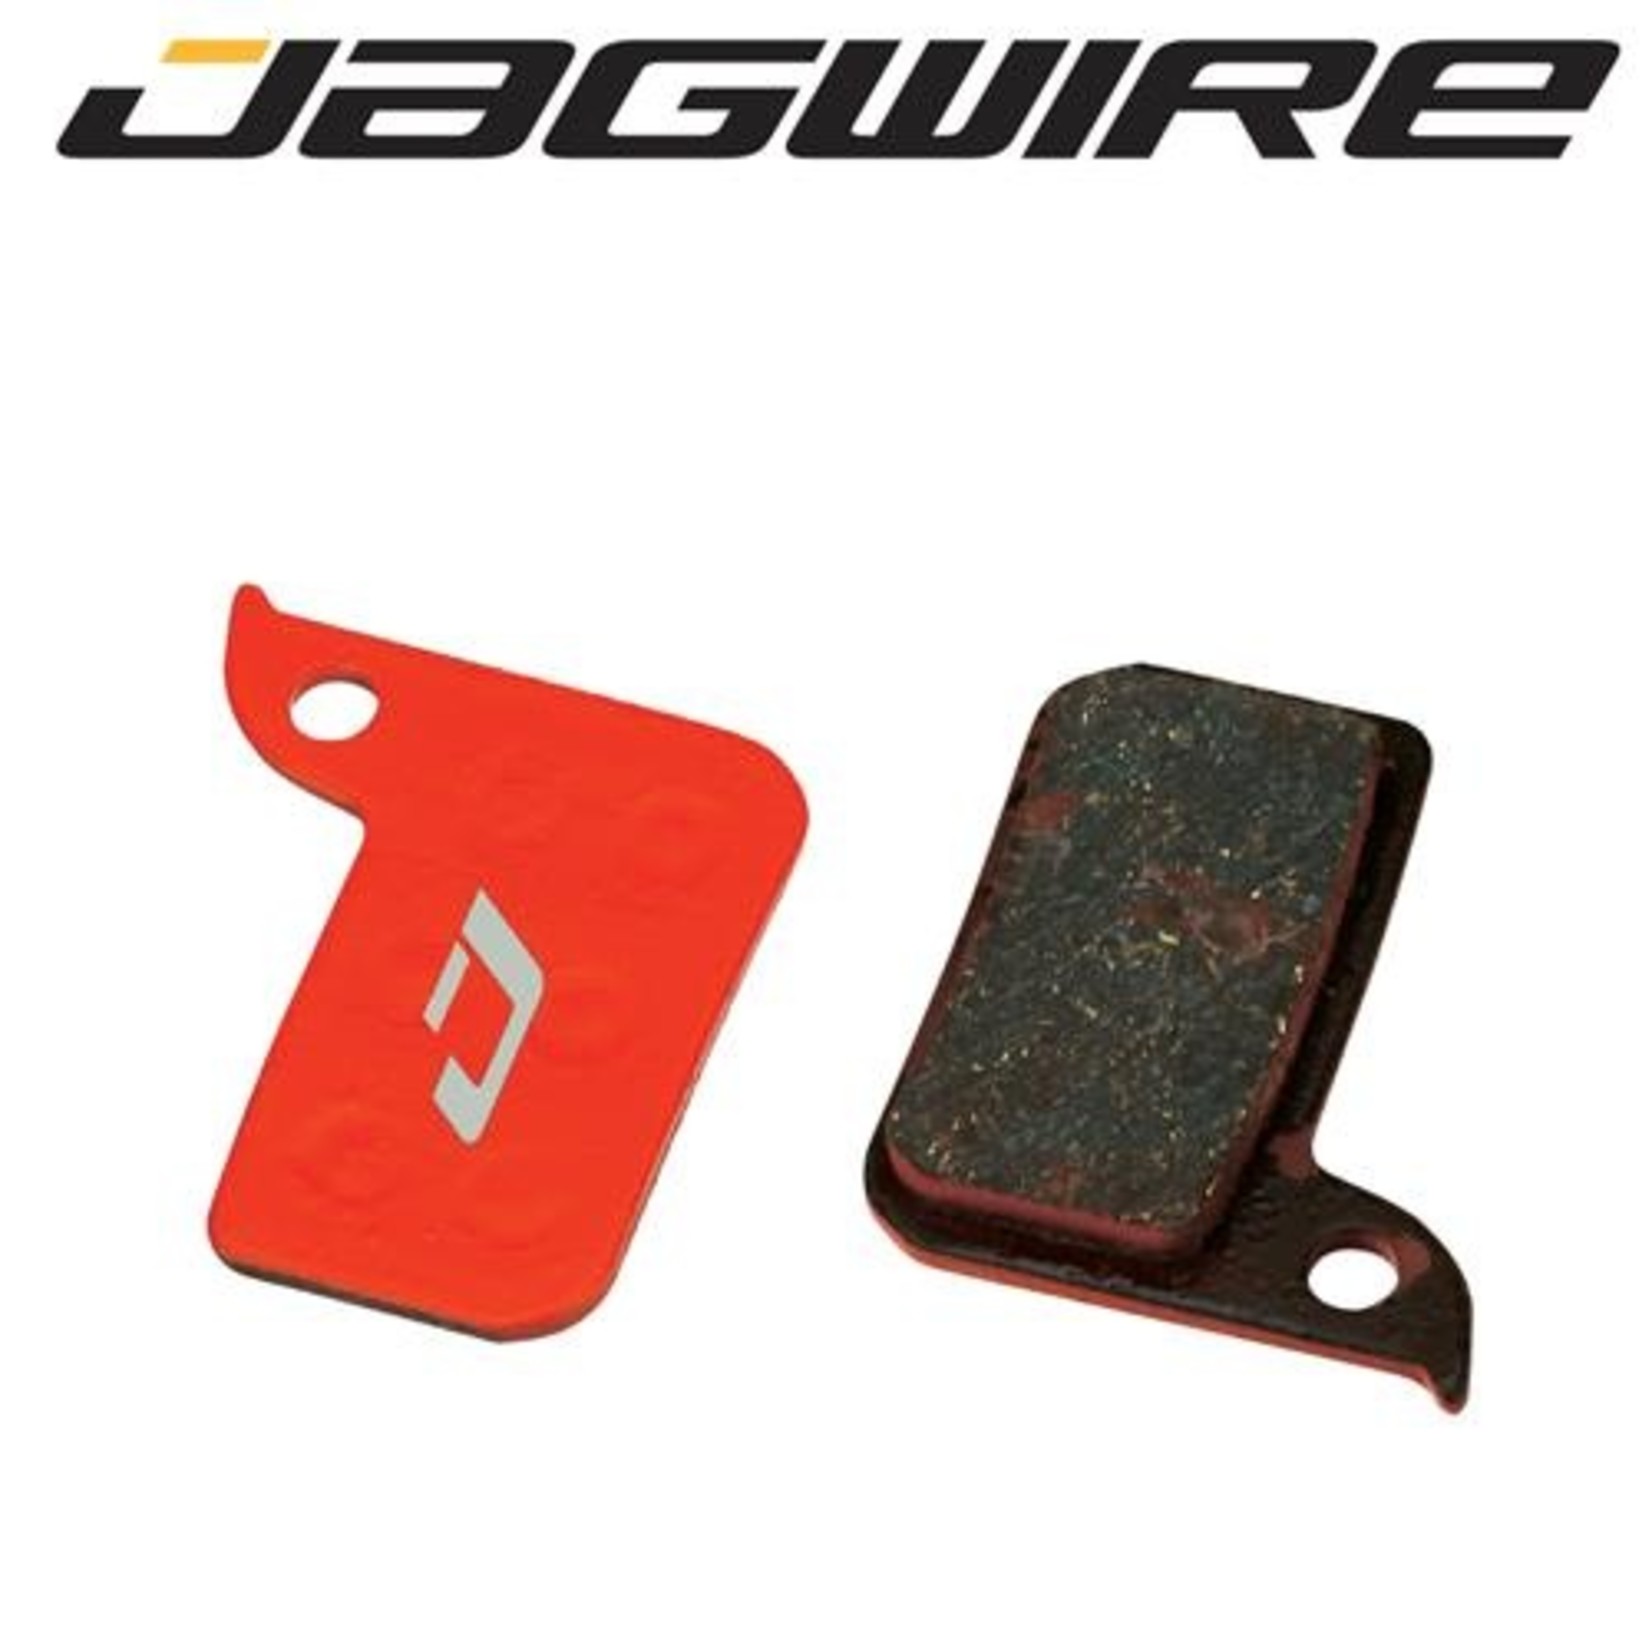 Jagwire Jagwire Bike Disc Brake Pads - SRAM/Avid - Red 22 /Force/CX1/Rival/Level